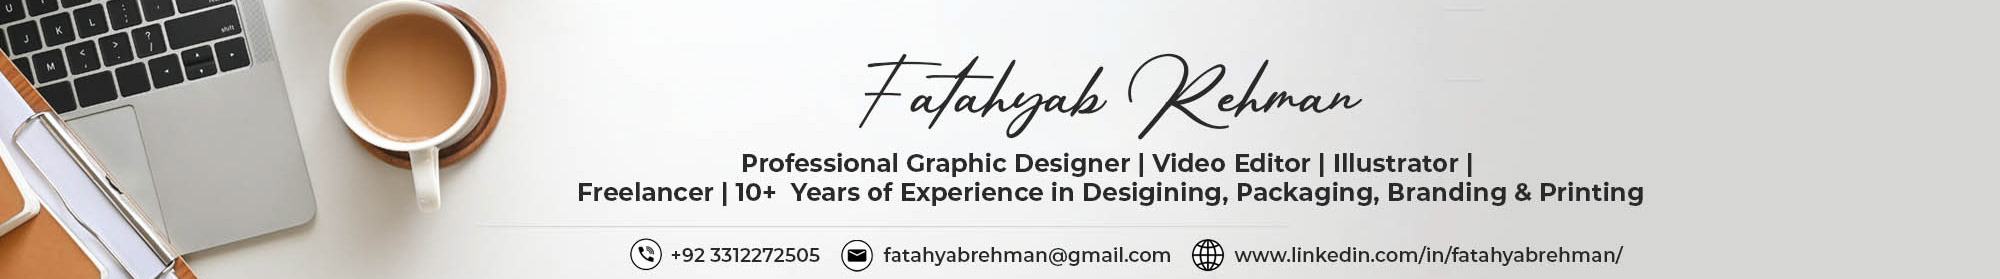 Profielbanner van Fatahyab Rehman